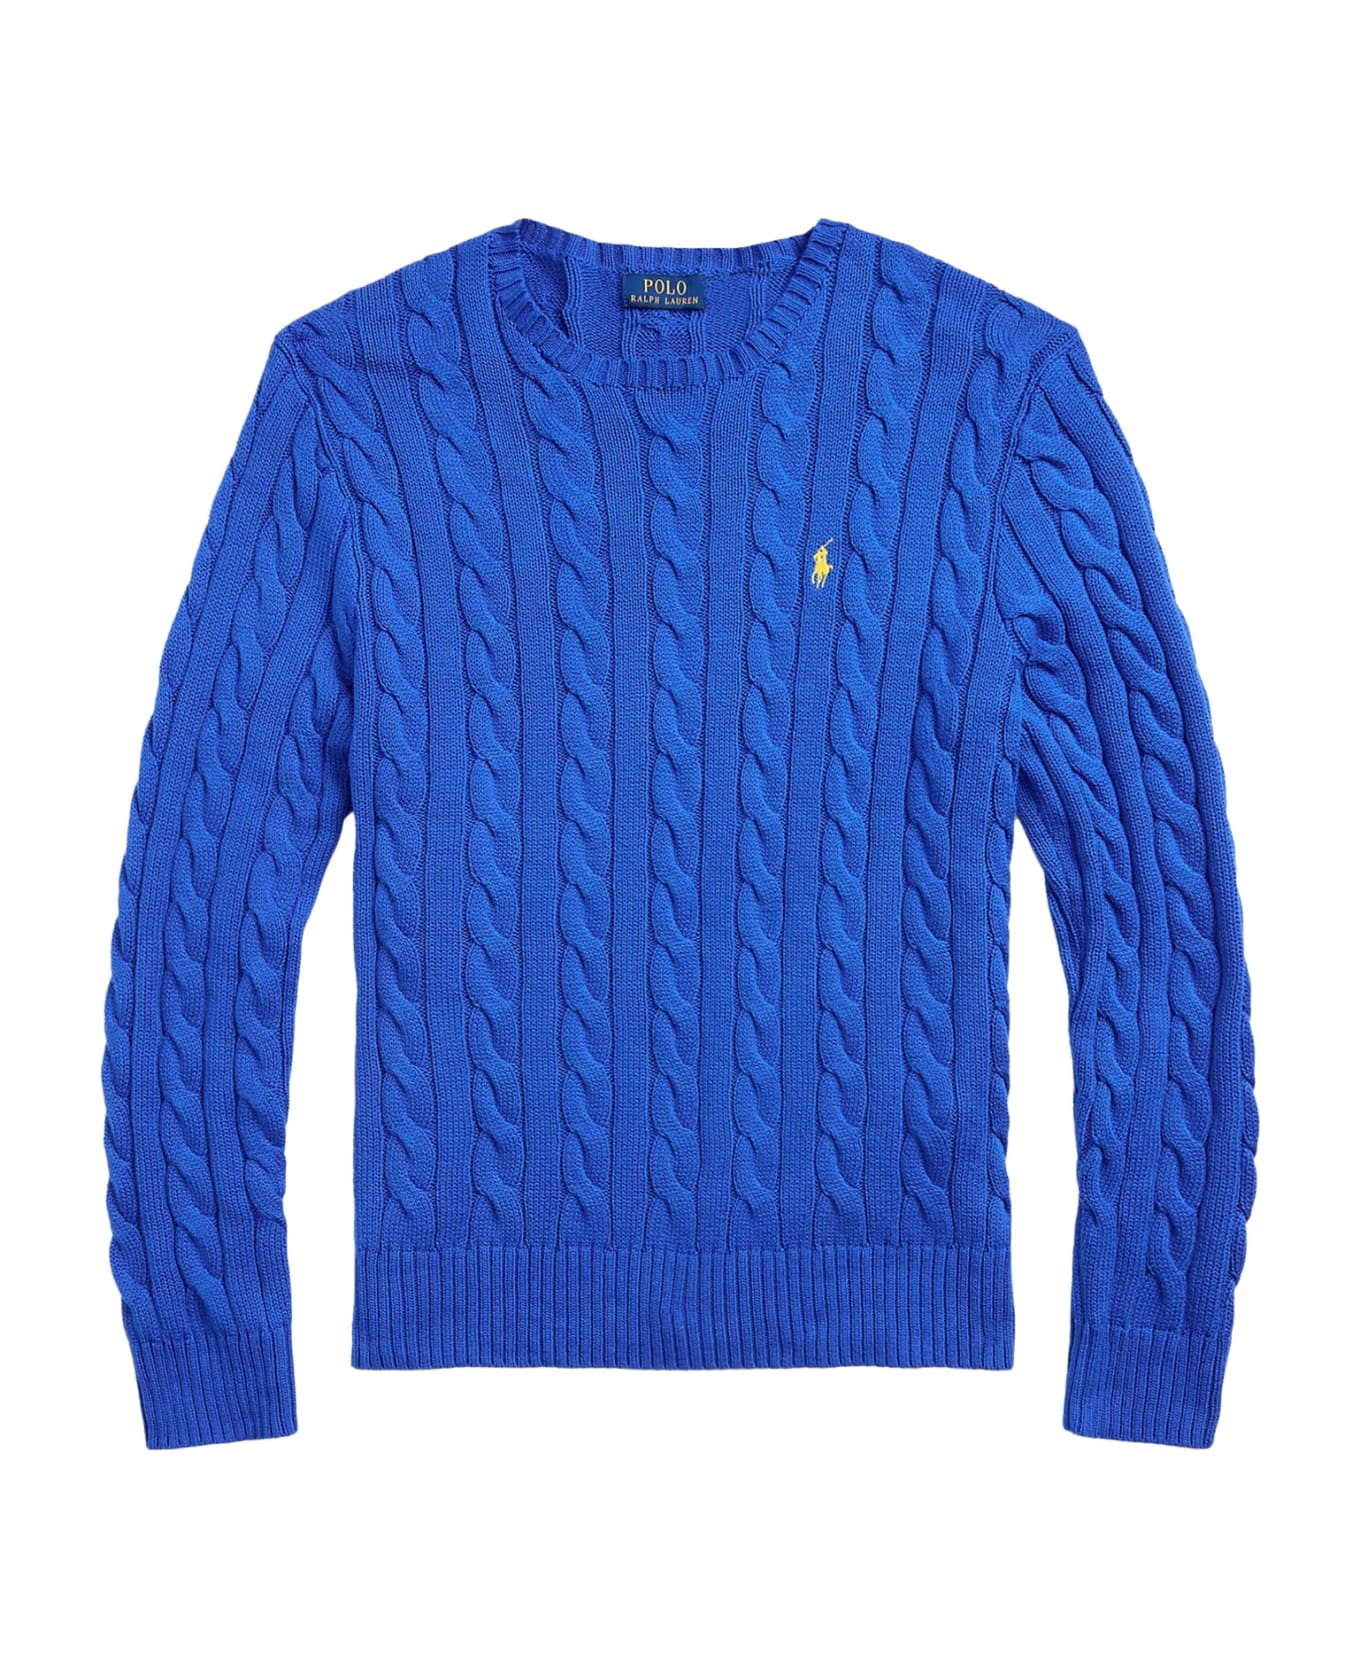 Polo Ralph Lauren Sweater - HERITAGE BLUE